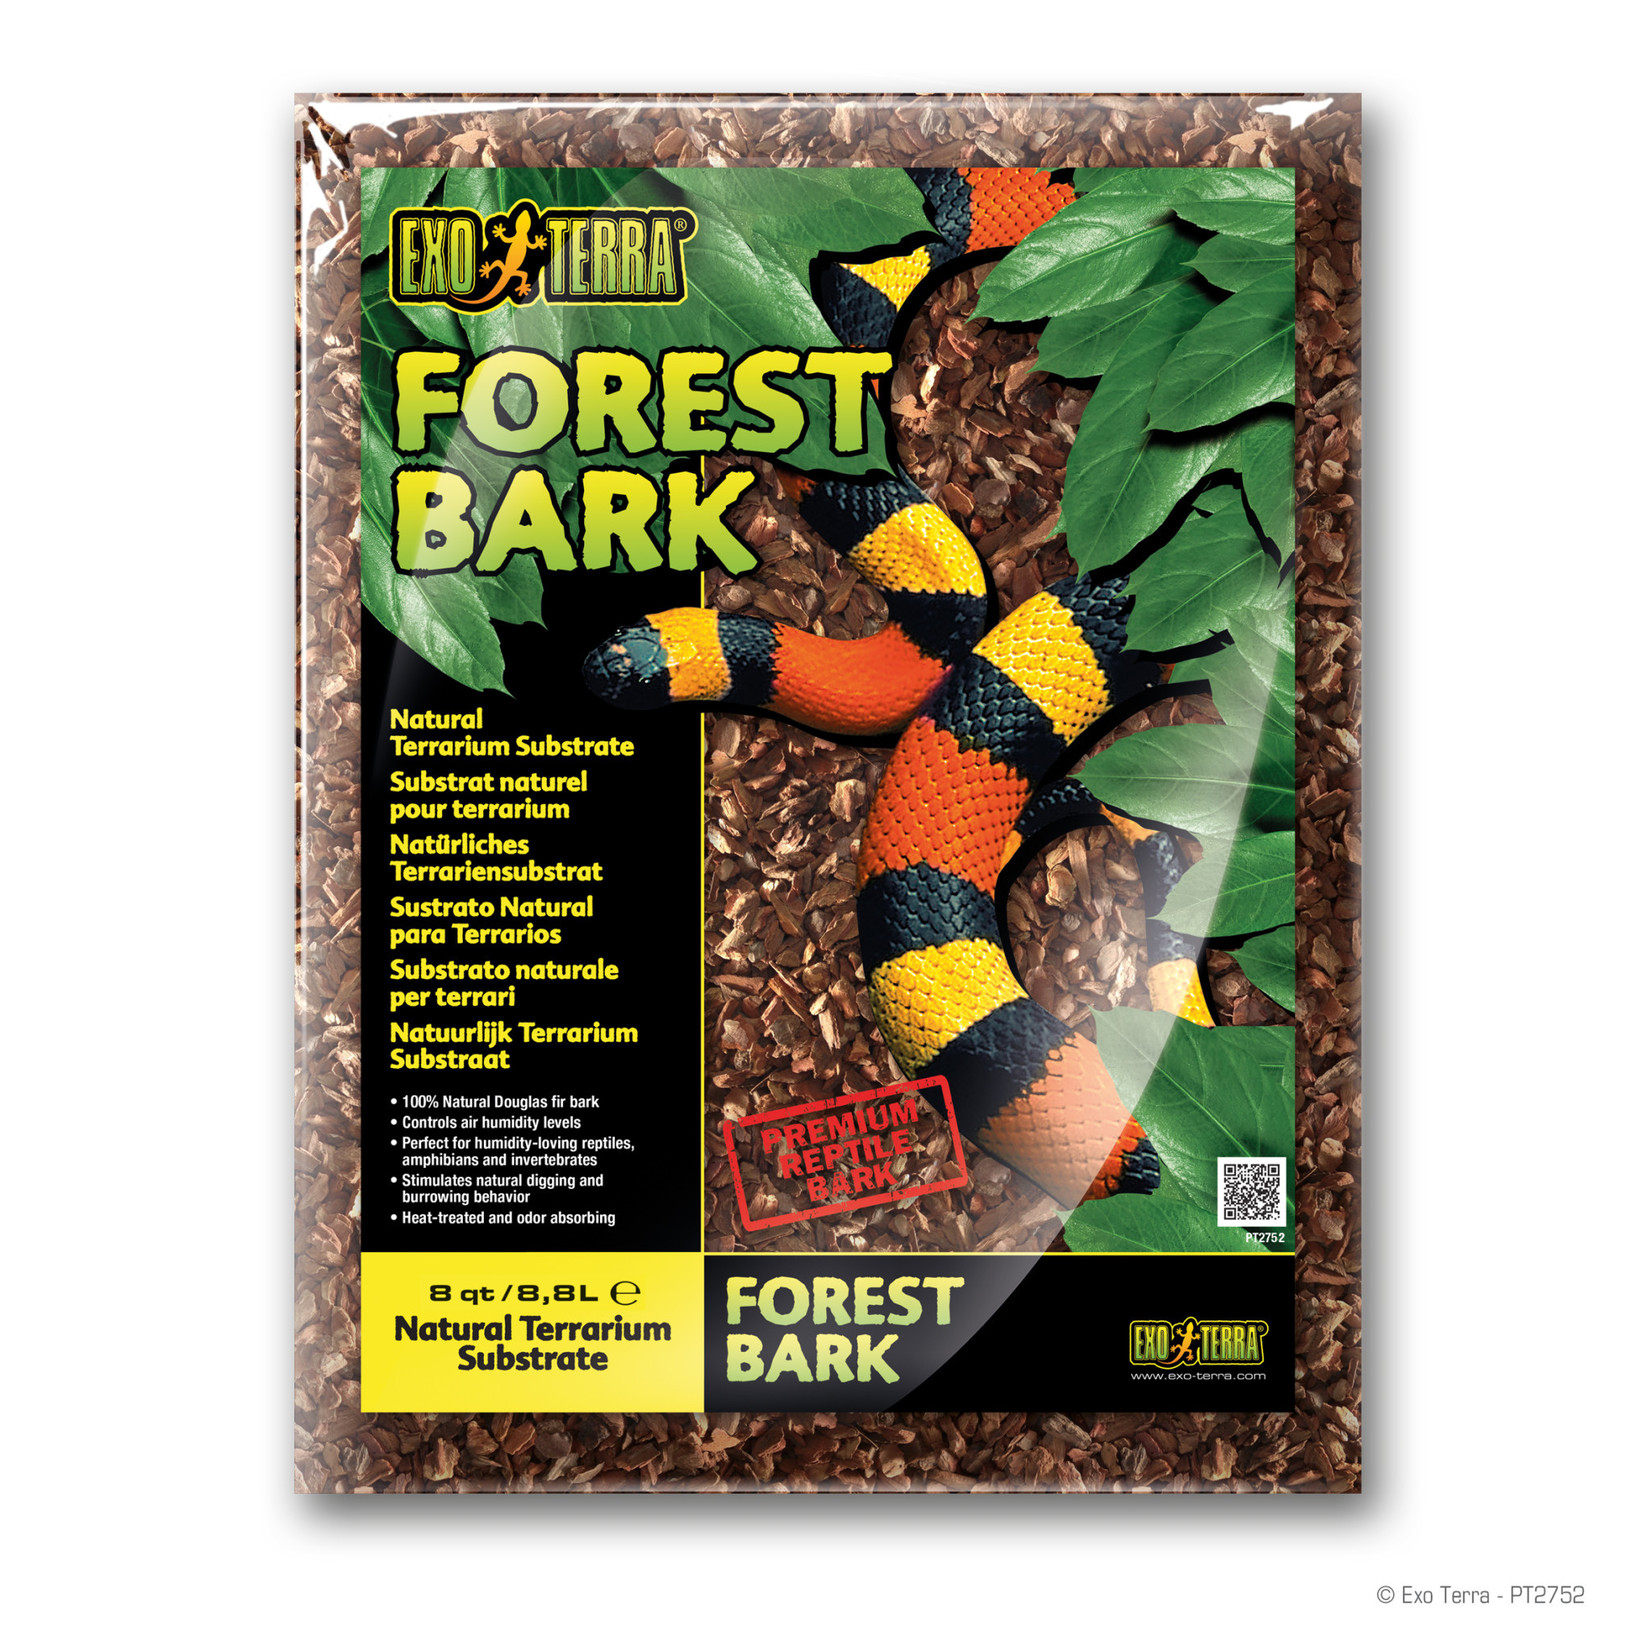 EXO TERRA Exo Terra Forest Bark - 8 qt (8.8 L)